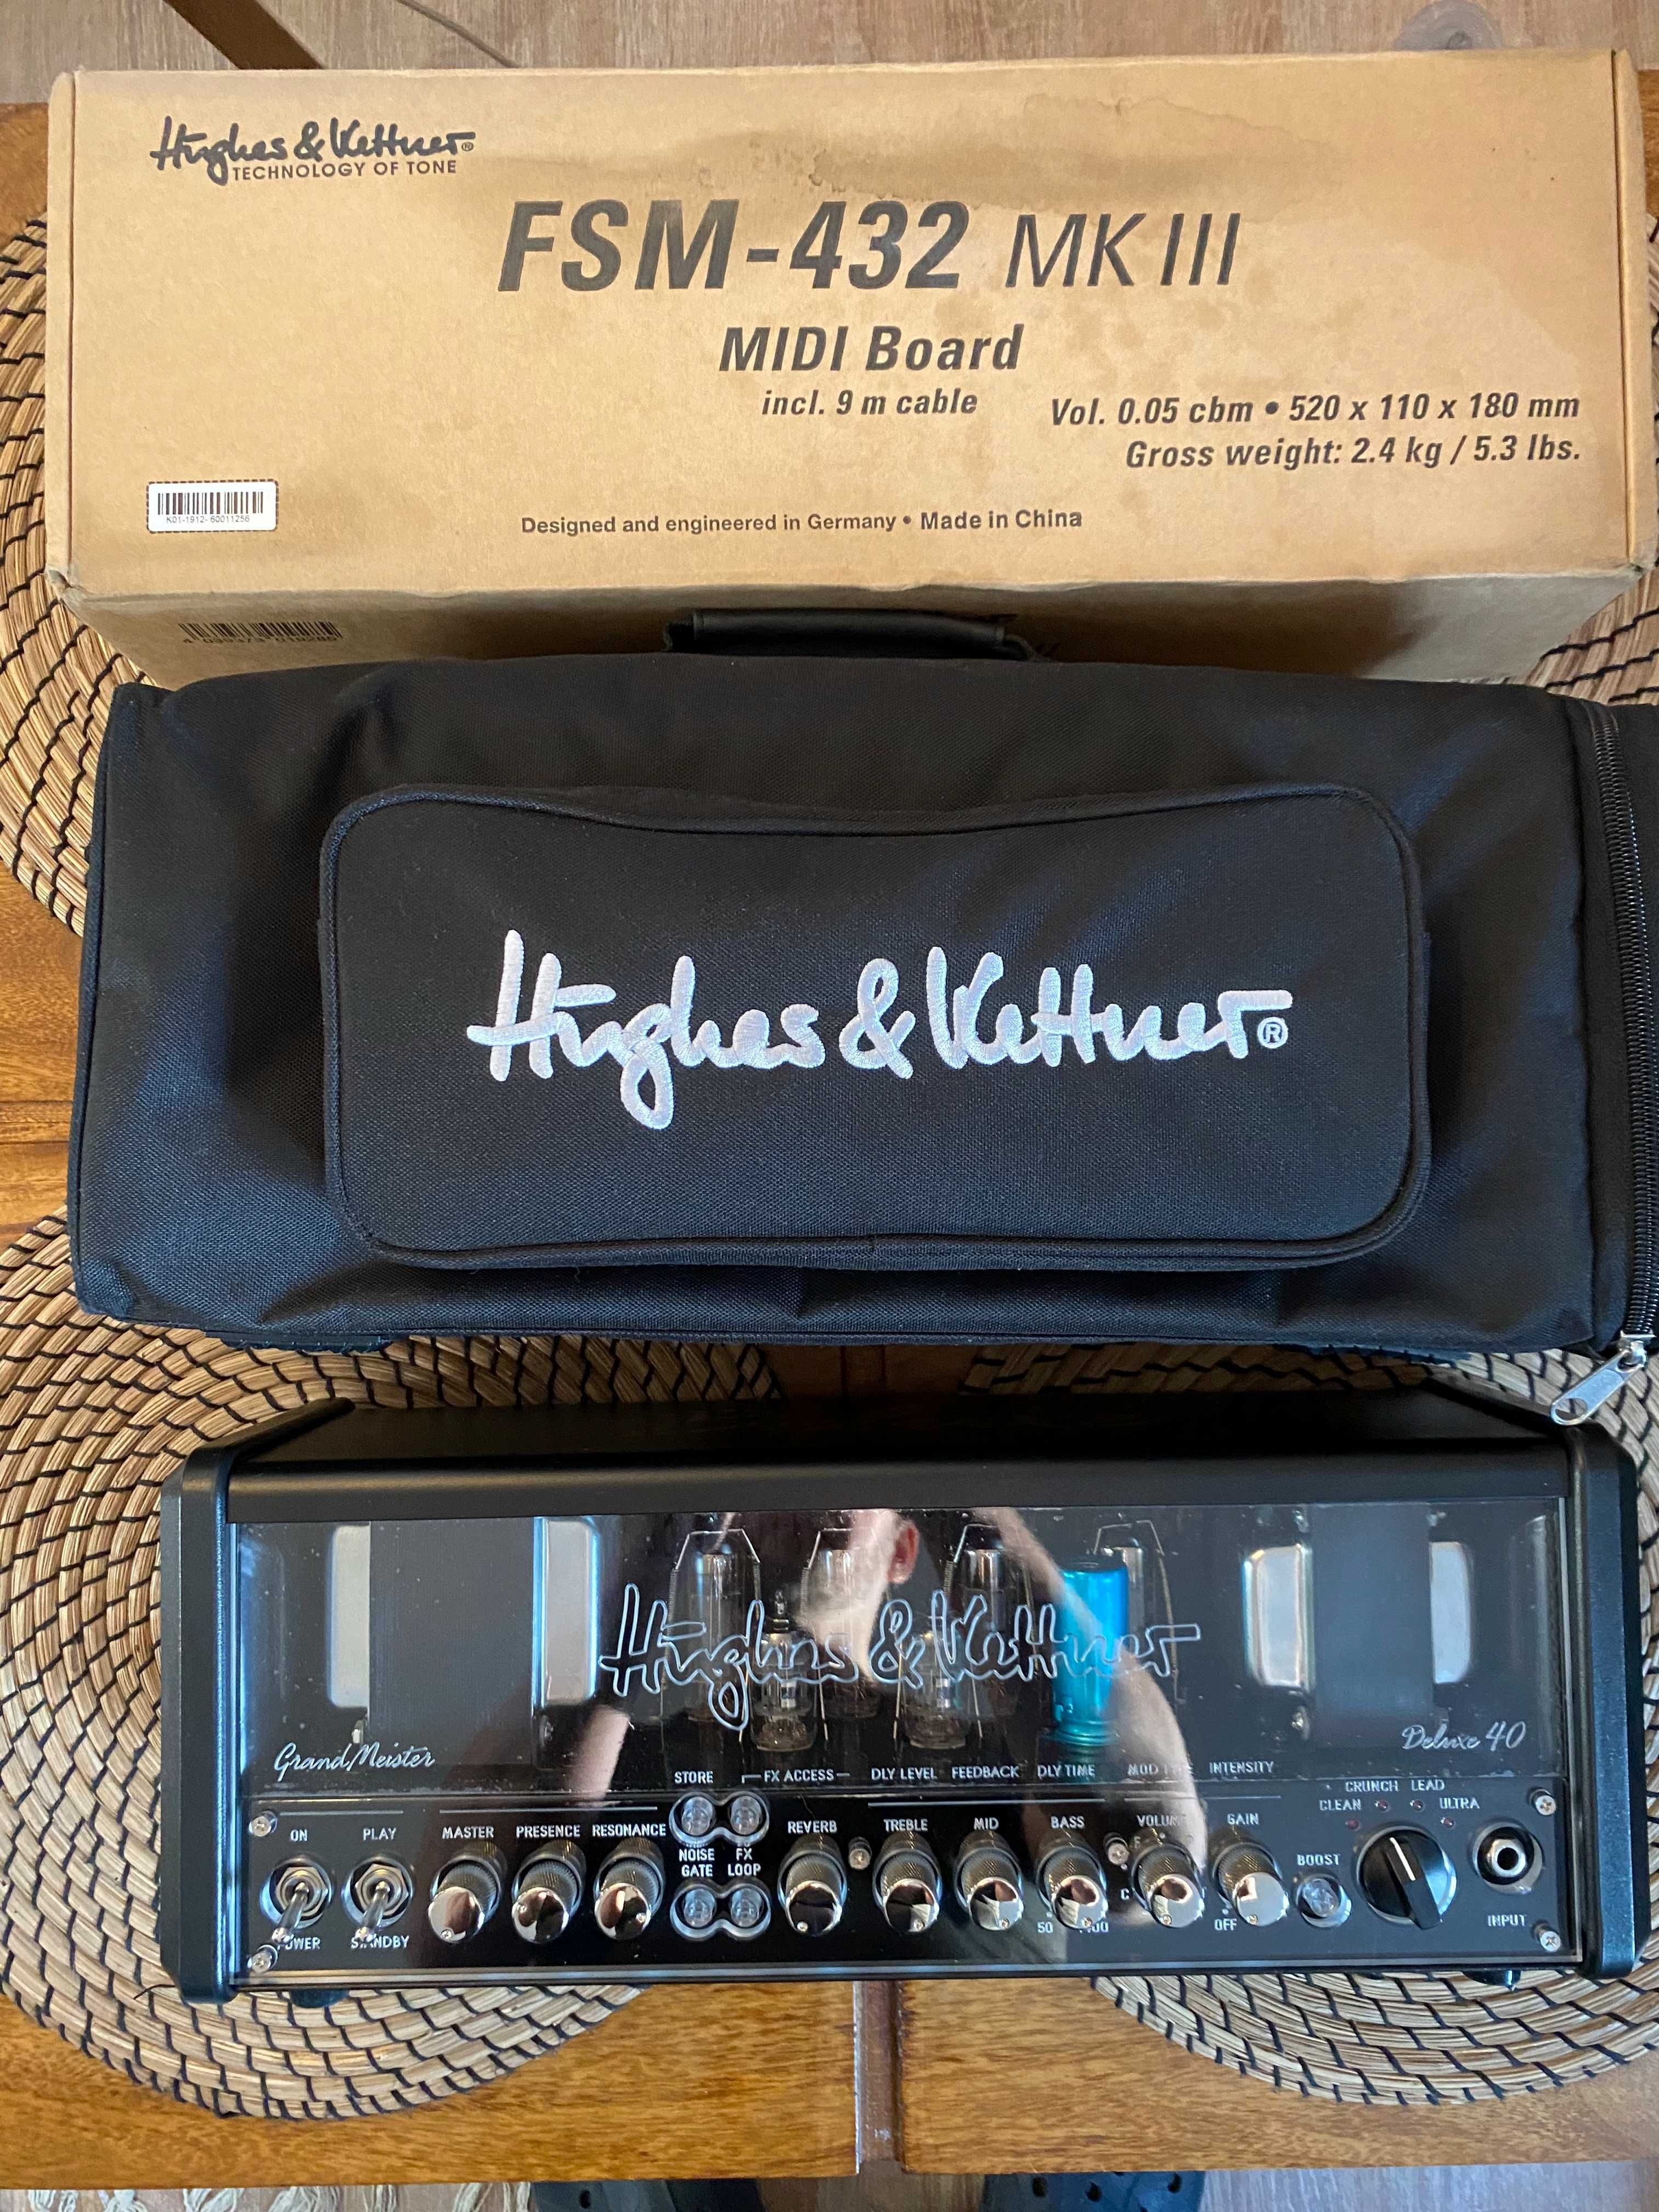 Hughes&Kettner Grandmeister Deluxe 40 + MIDI FMS 432 MKIII + kolumna